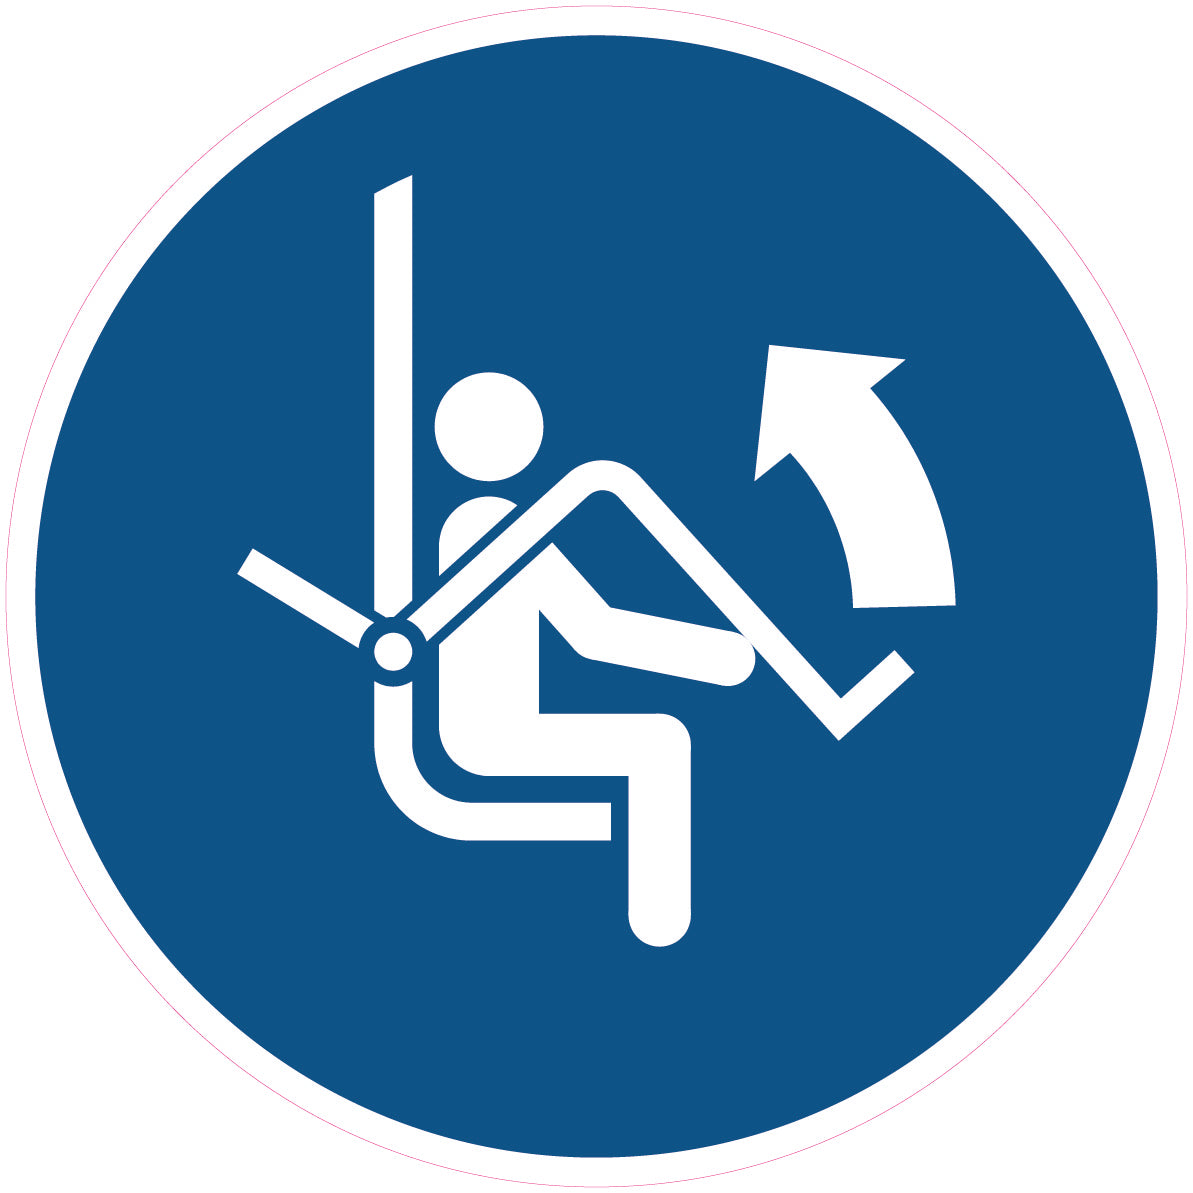 Gebod Beugel stoeltjeslift openen | Pictogram sticker